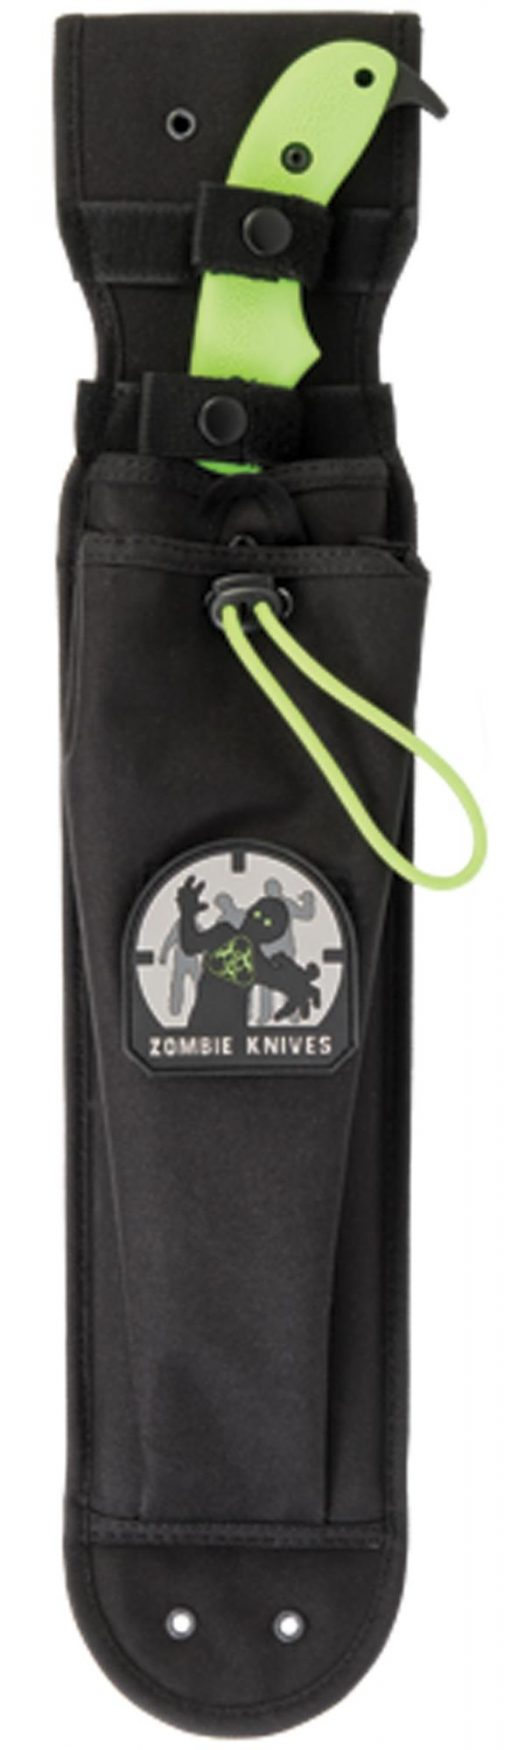 Ka-Bar Zomstro Knife1095 Blade Zombie Green GFN-PA66 Handle In Sheath